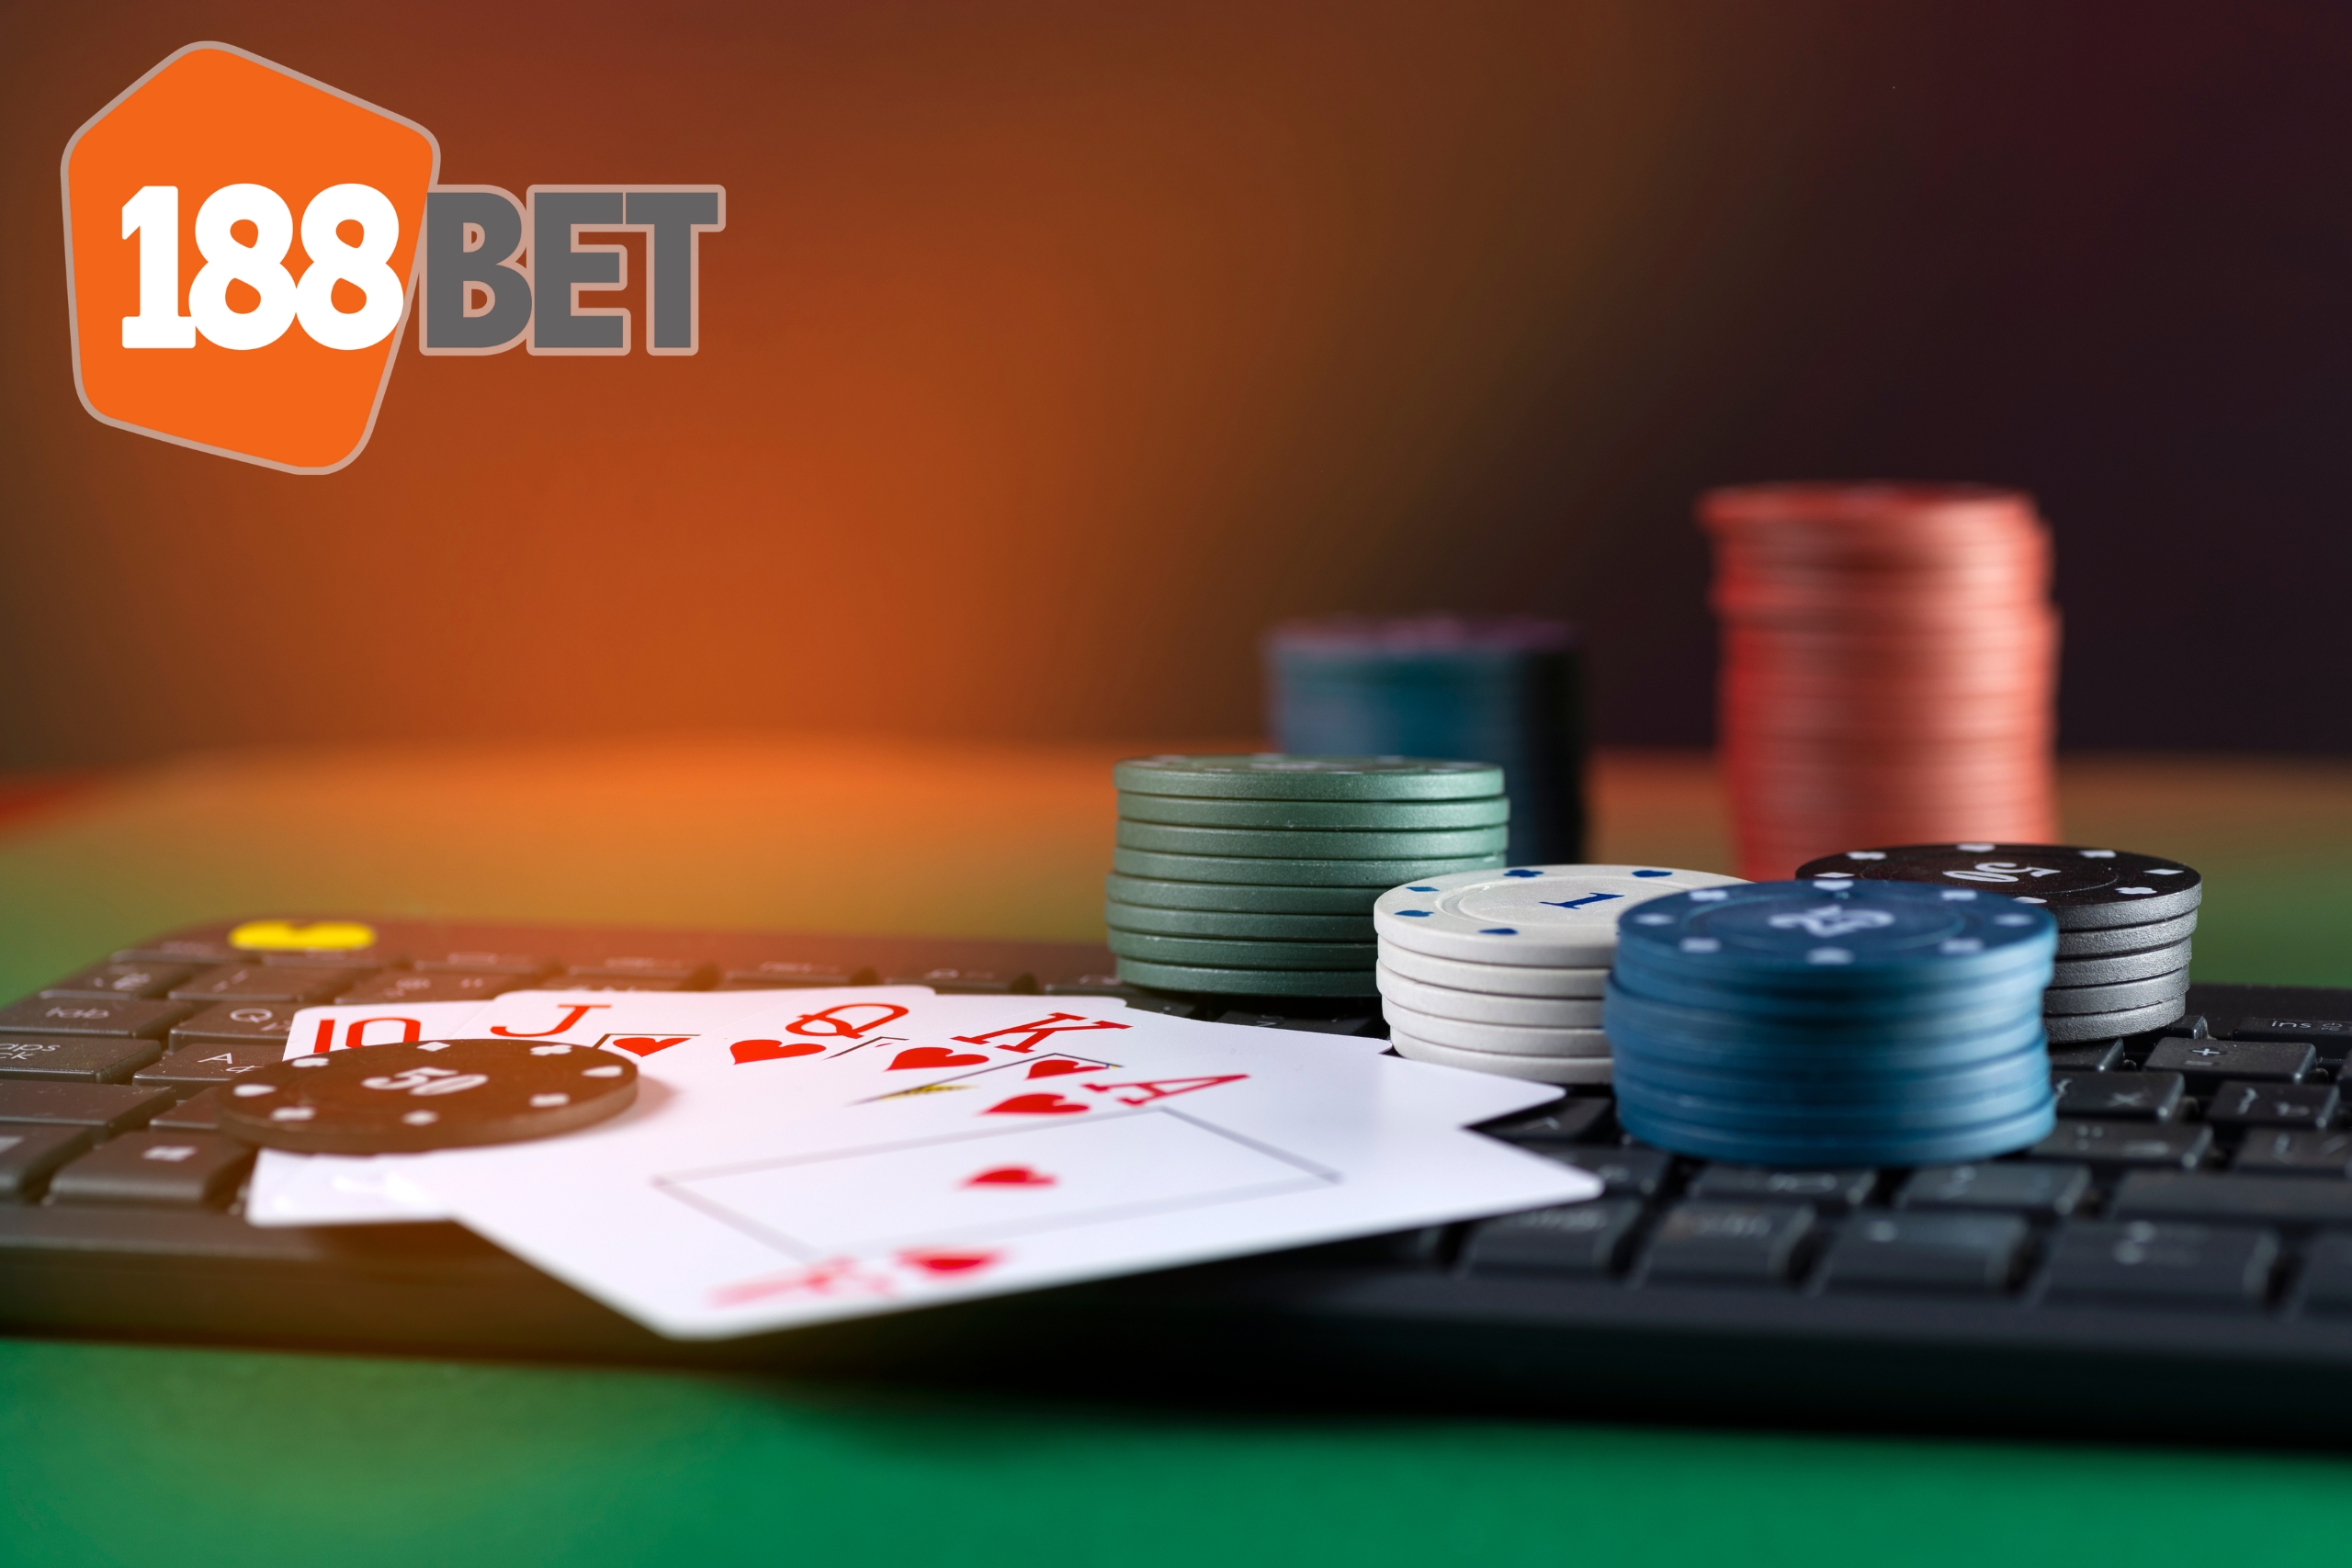 PG Slot: A Direct Website For Online Gambling